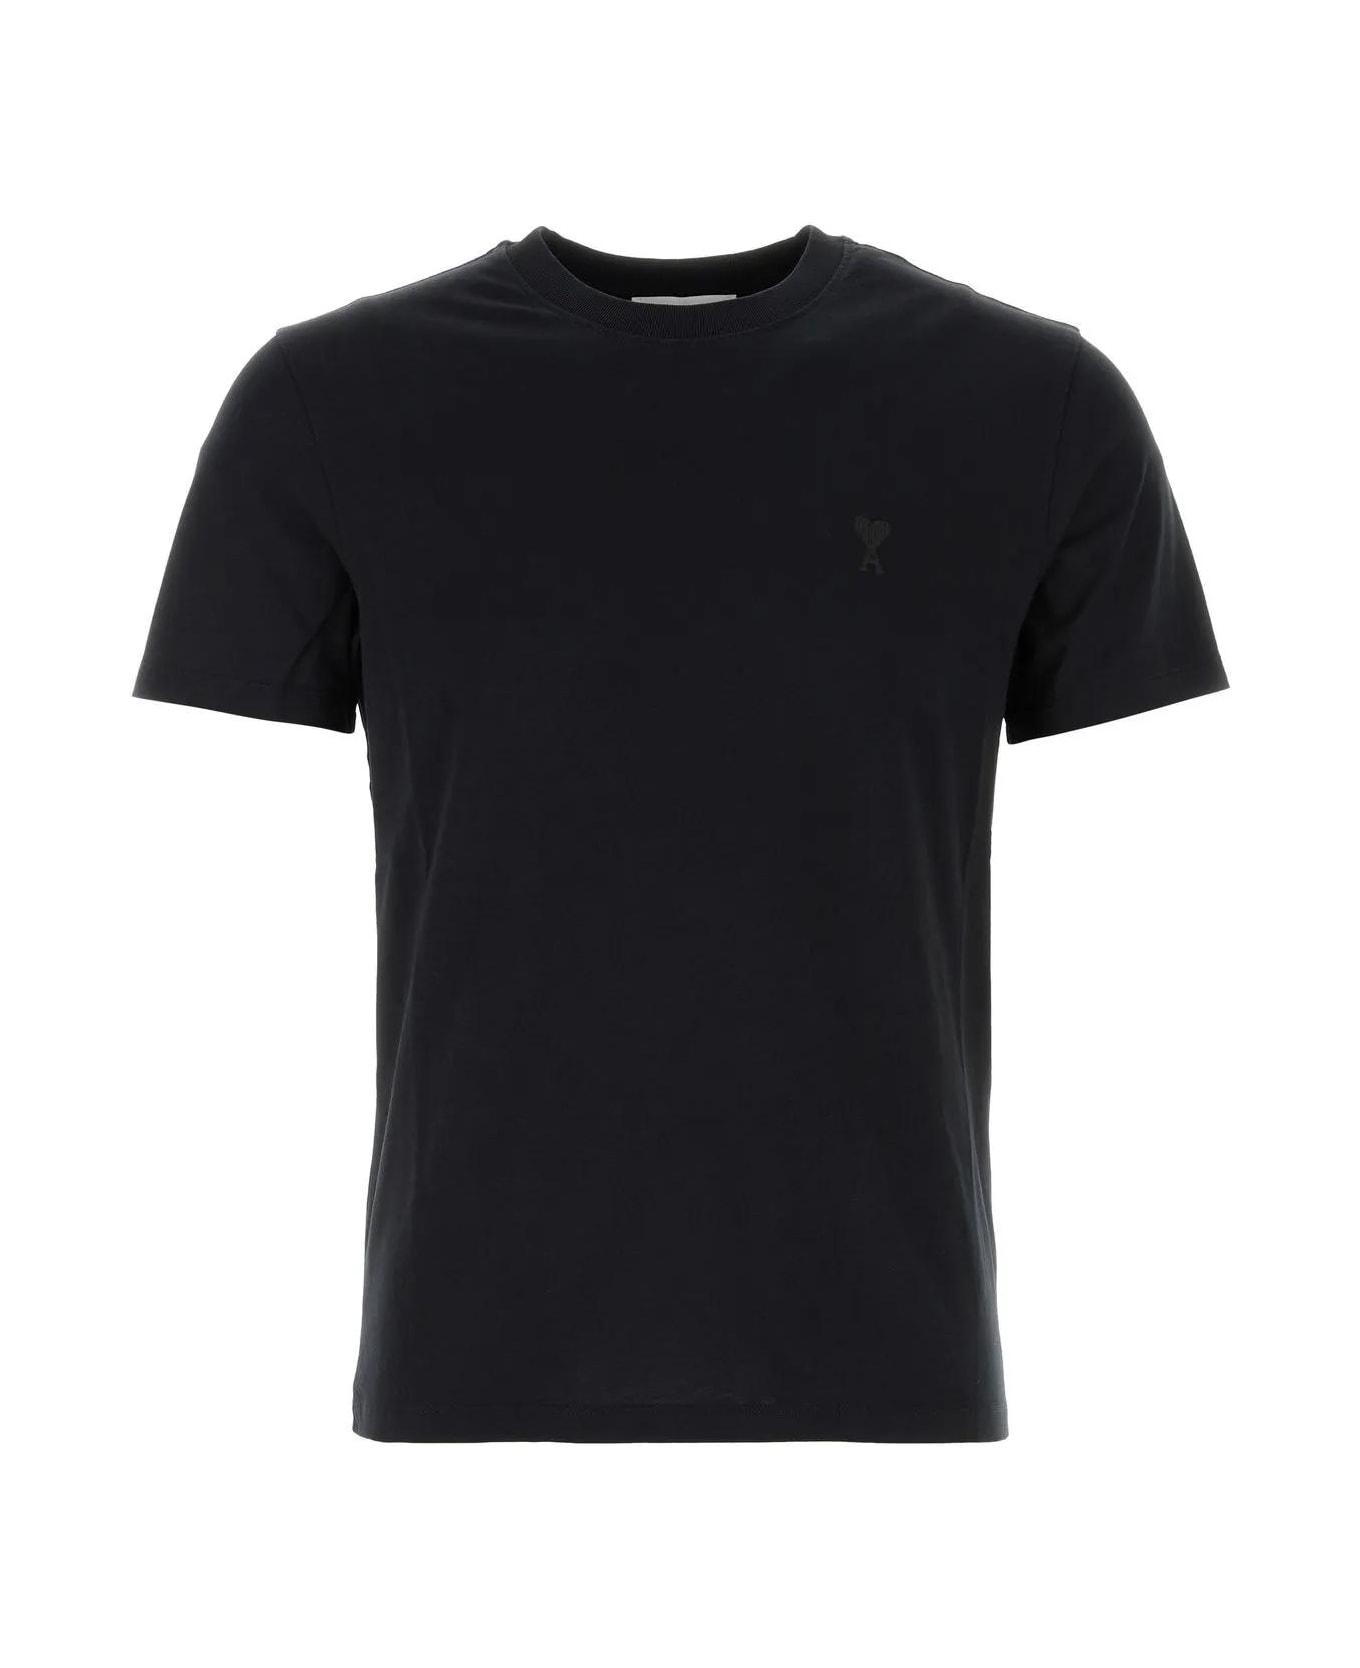 Ami Alexandre Mattiussi Black Cotton T-shirt - Black